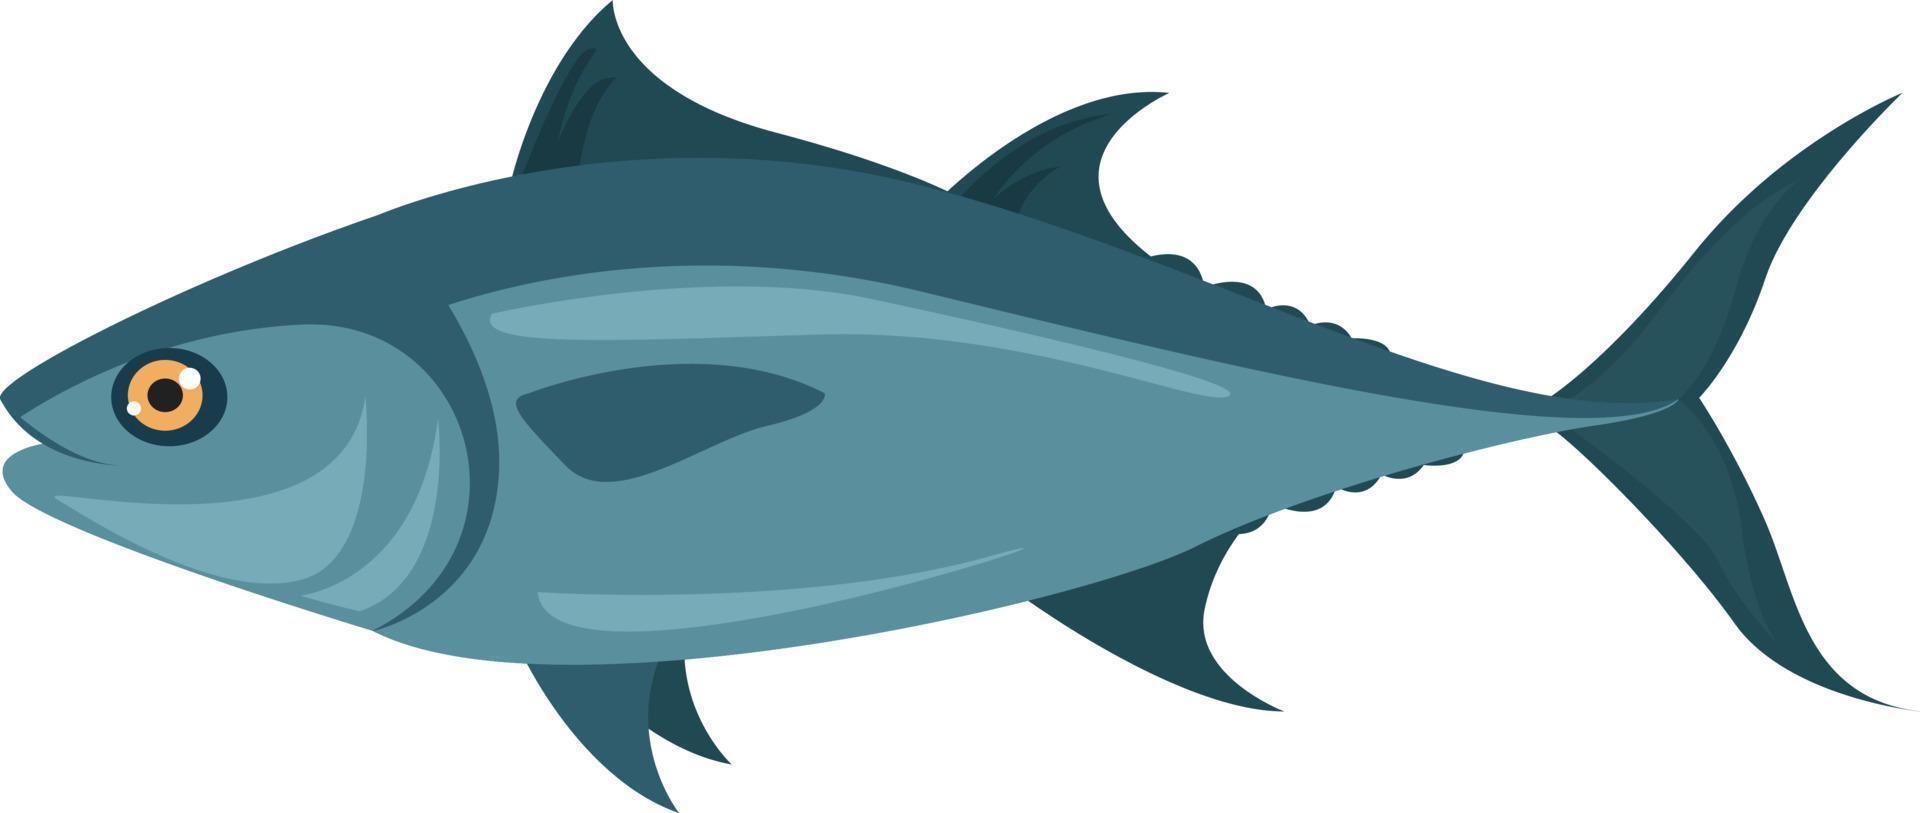 Blue tuna fish, illustration, vector on white background